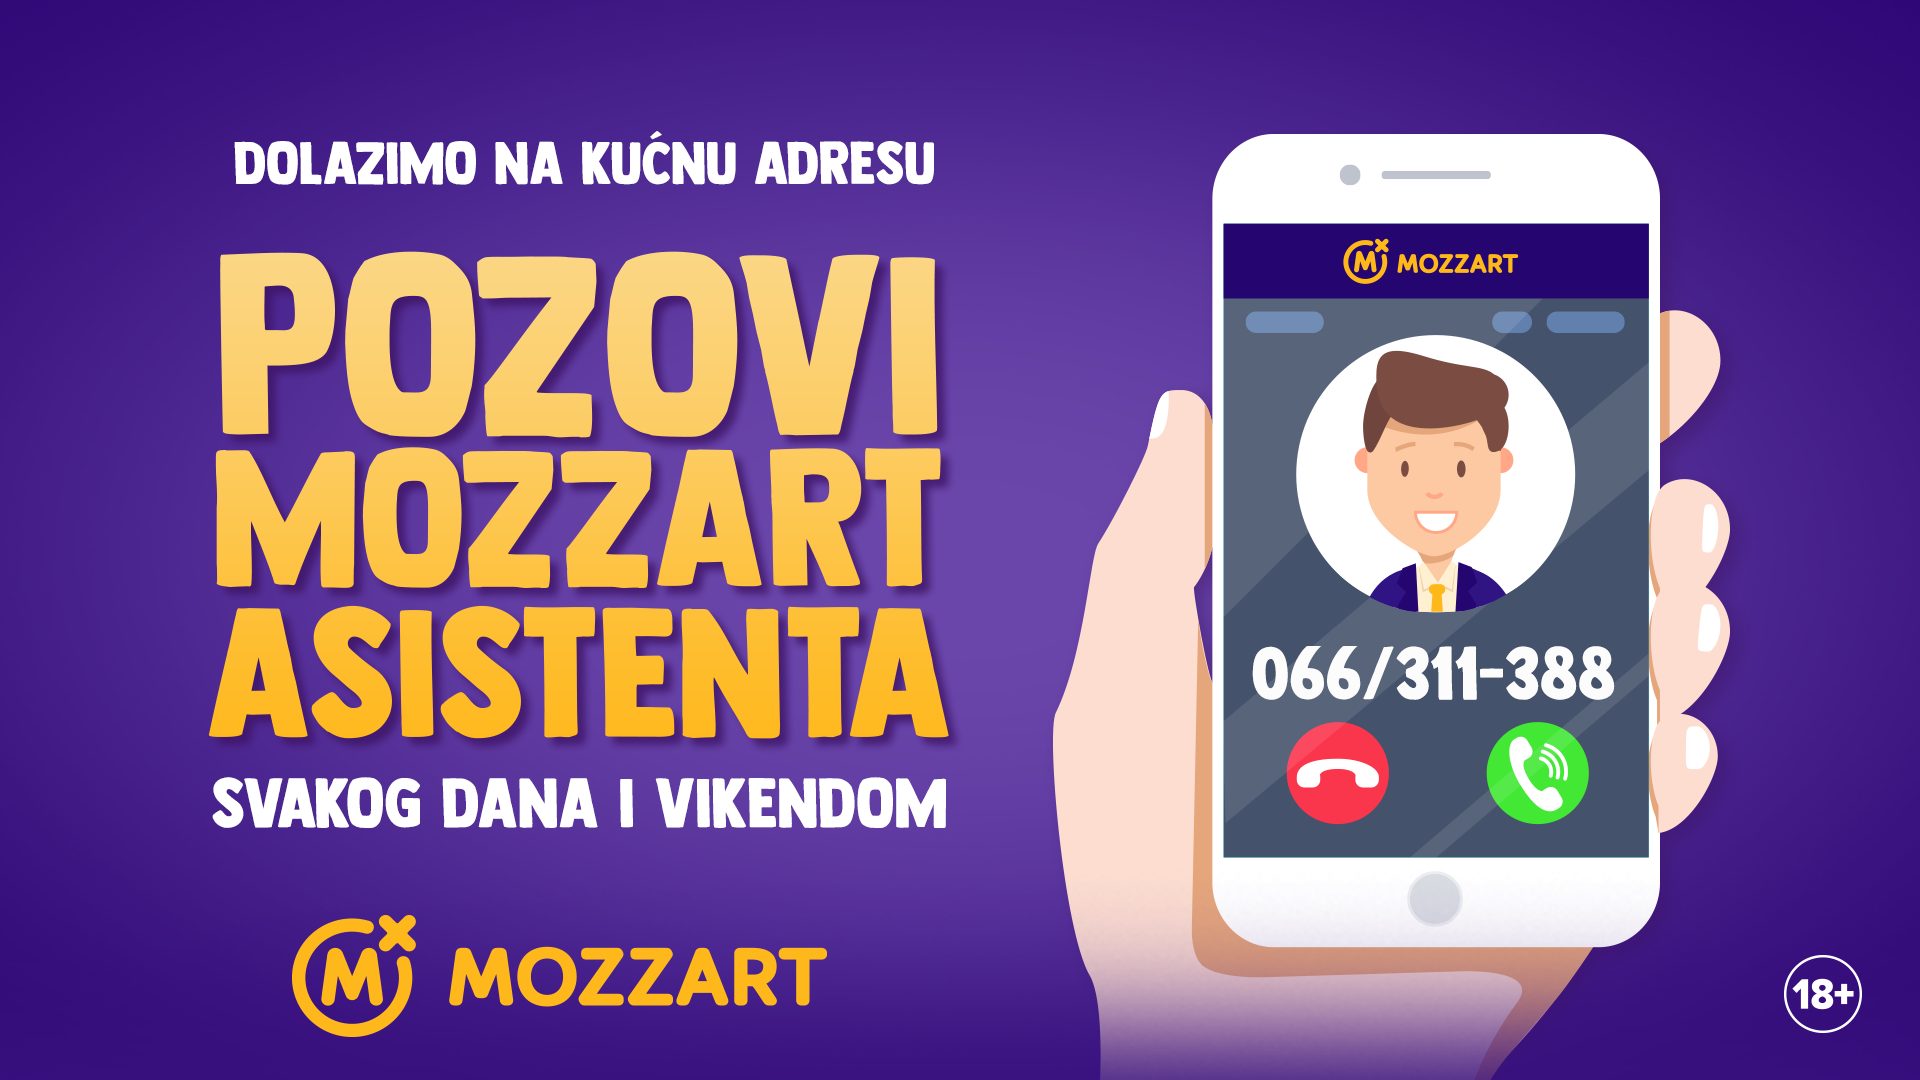 Pozovi Mozzart asistenta – uplati avans sa kućnog praga! 1